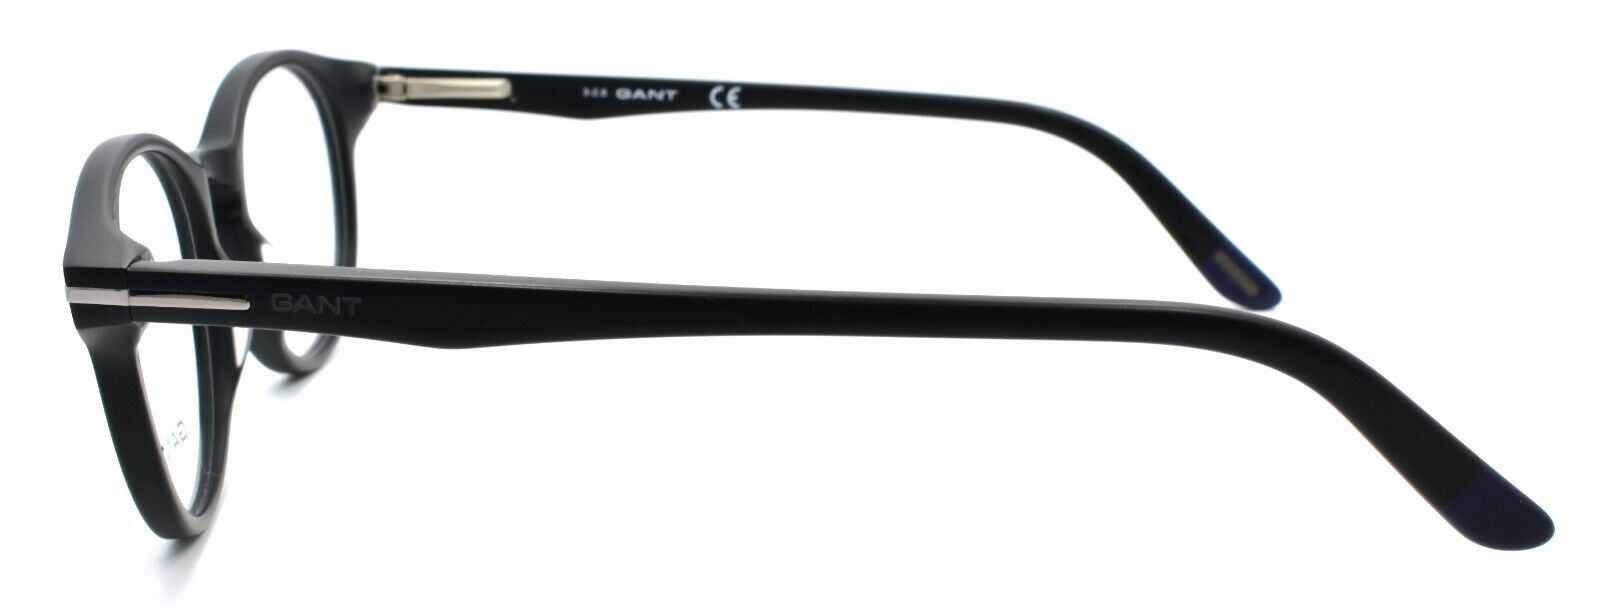 3-GANT GA3060 002 Men's Eyeglasses Frames Round 48-17-140 Matte Black-664689694389-IKSpecs